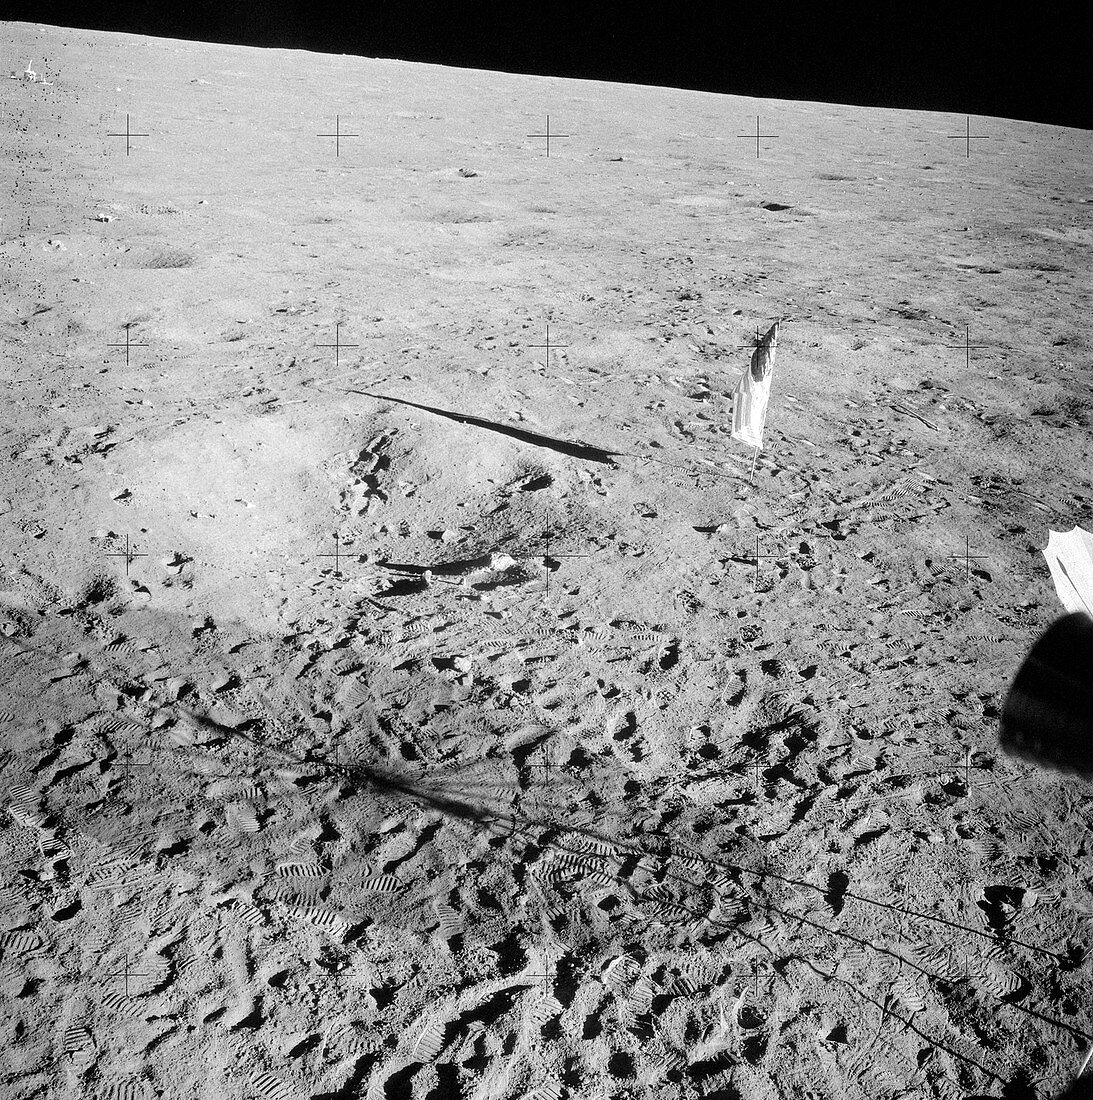 Apollo 12 flag, footprints and shadows, 1969